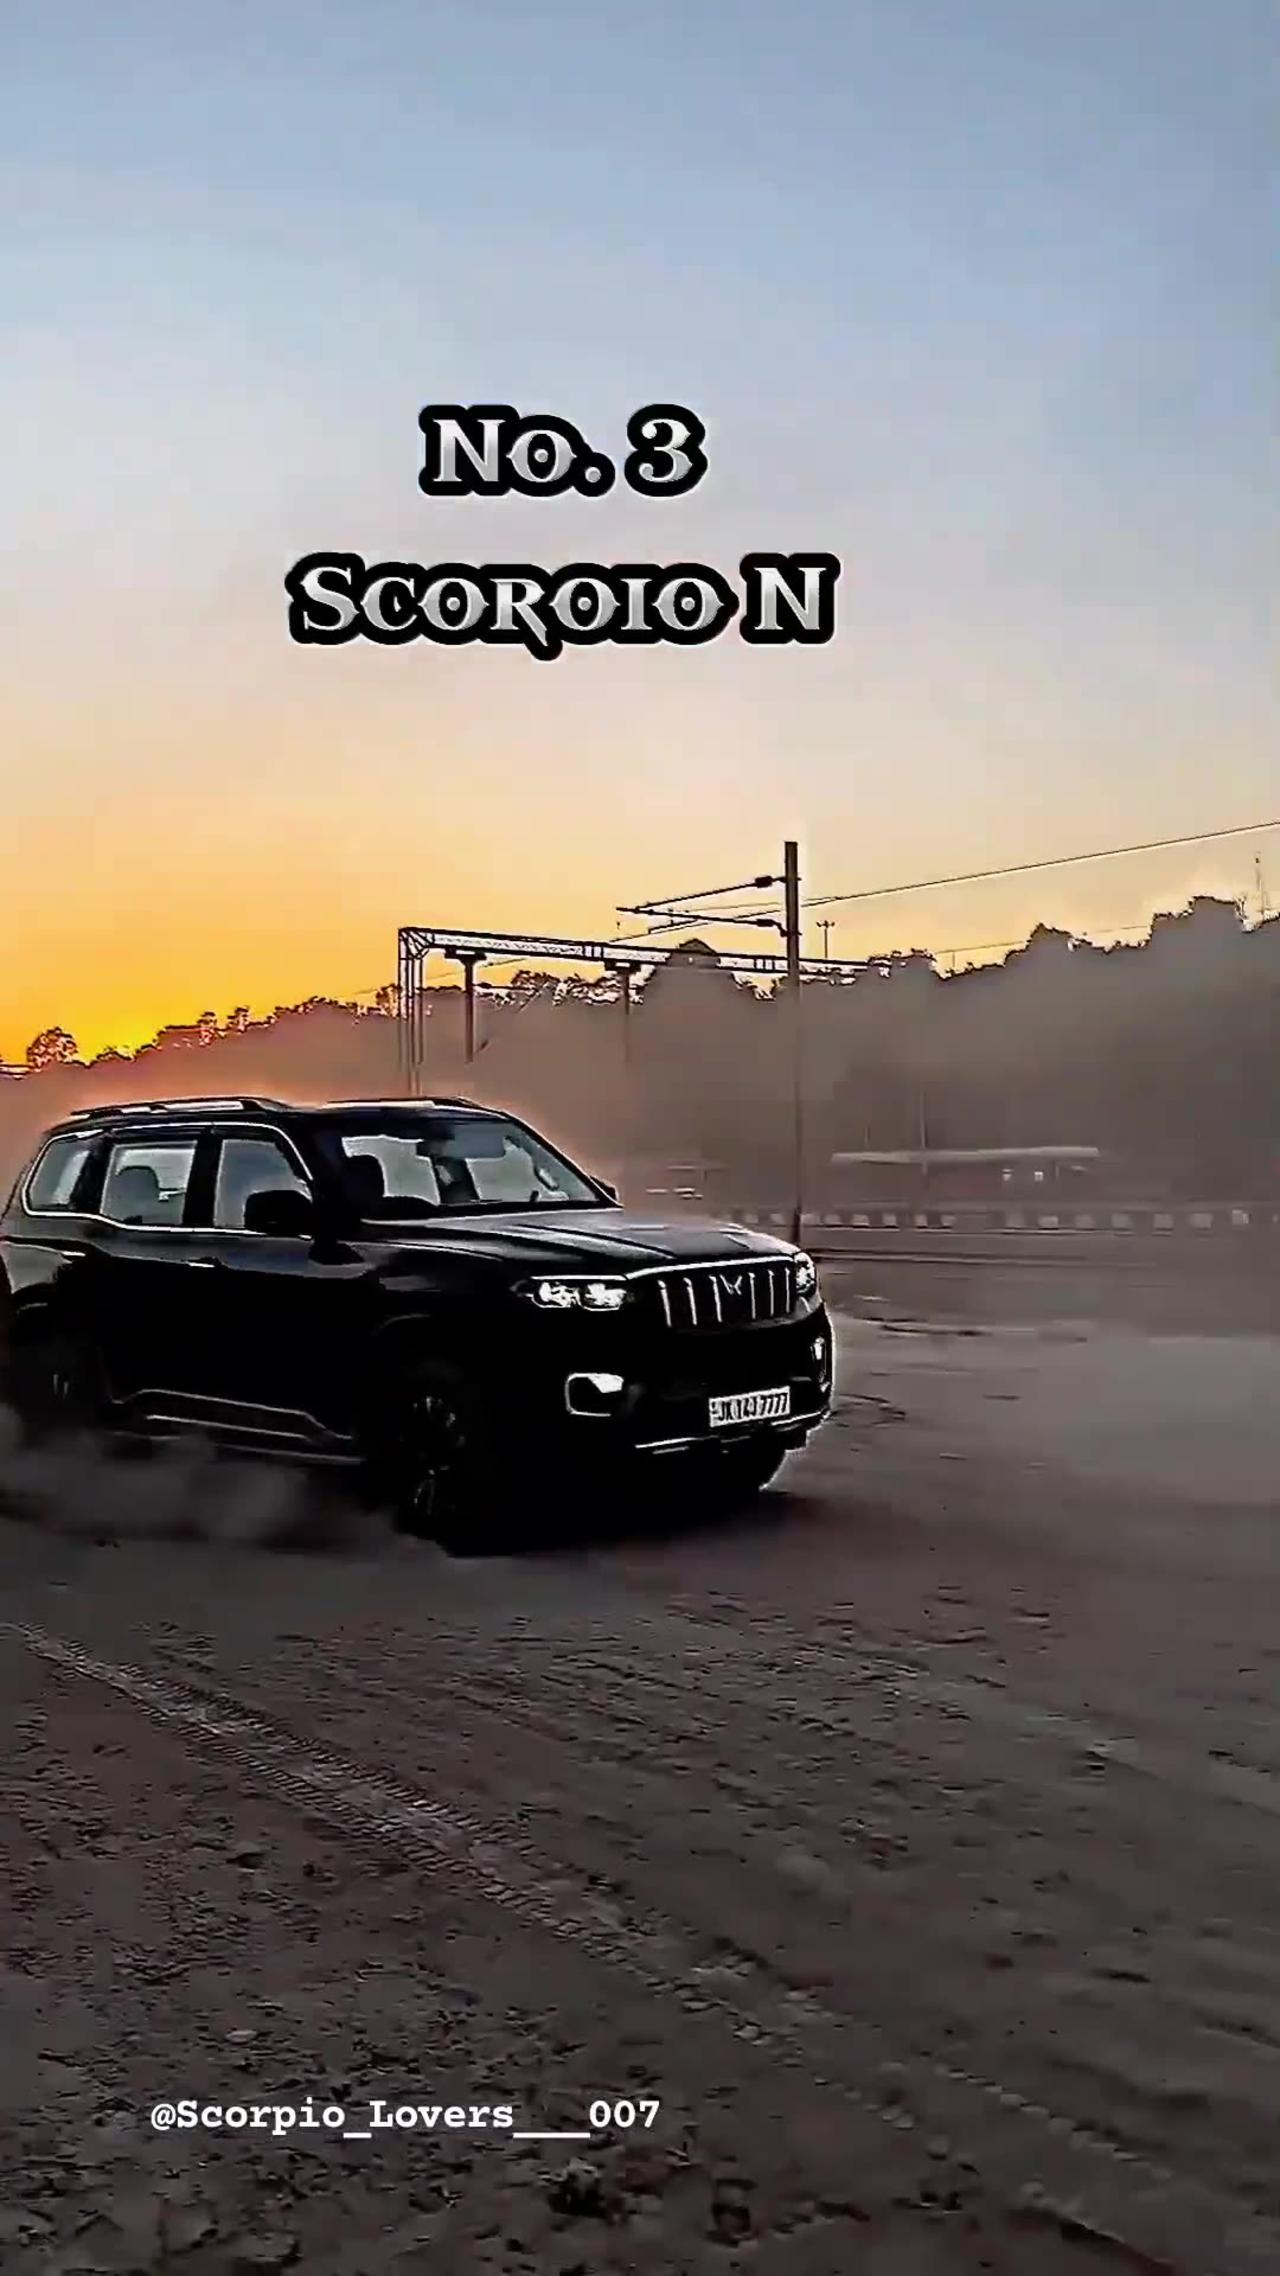 INDIA MOST 5 BEAUTIFULS CARS😈😈😈🤘🤞👍  car lovers #fortuner Scorpio thar Scorpio n tata safari